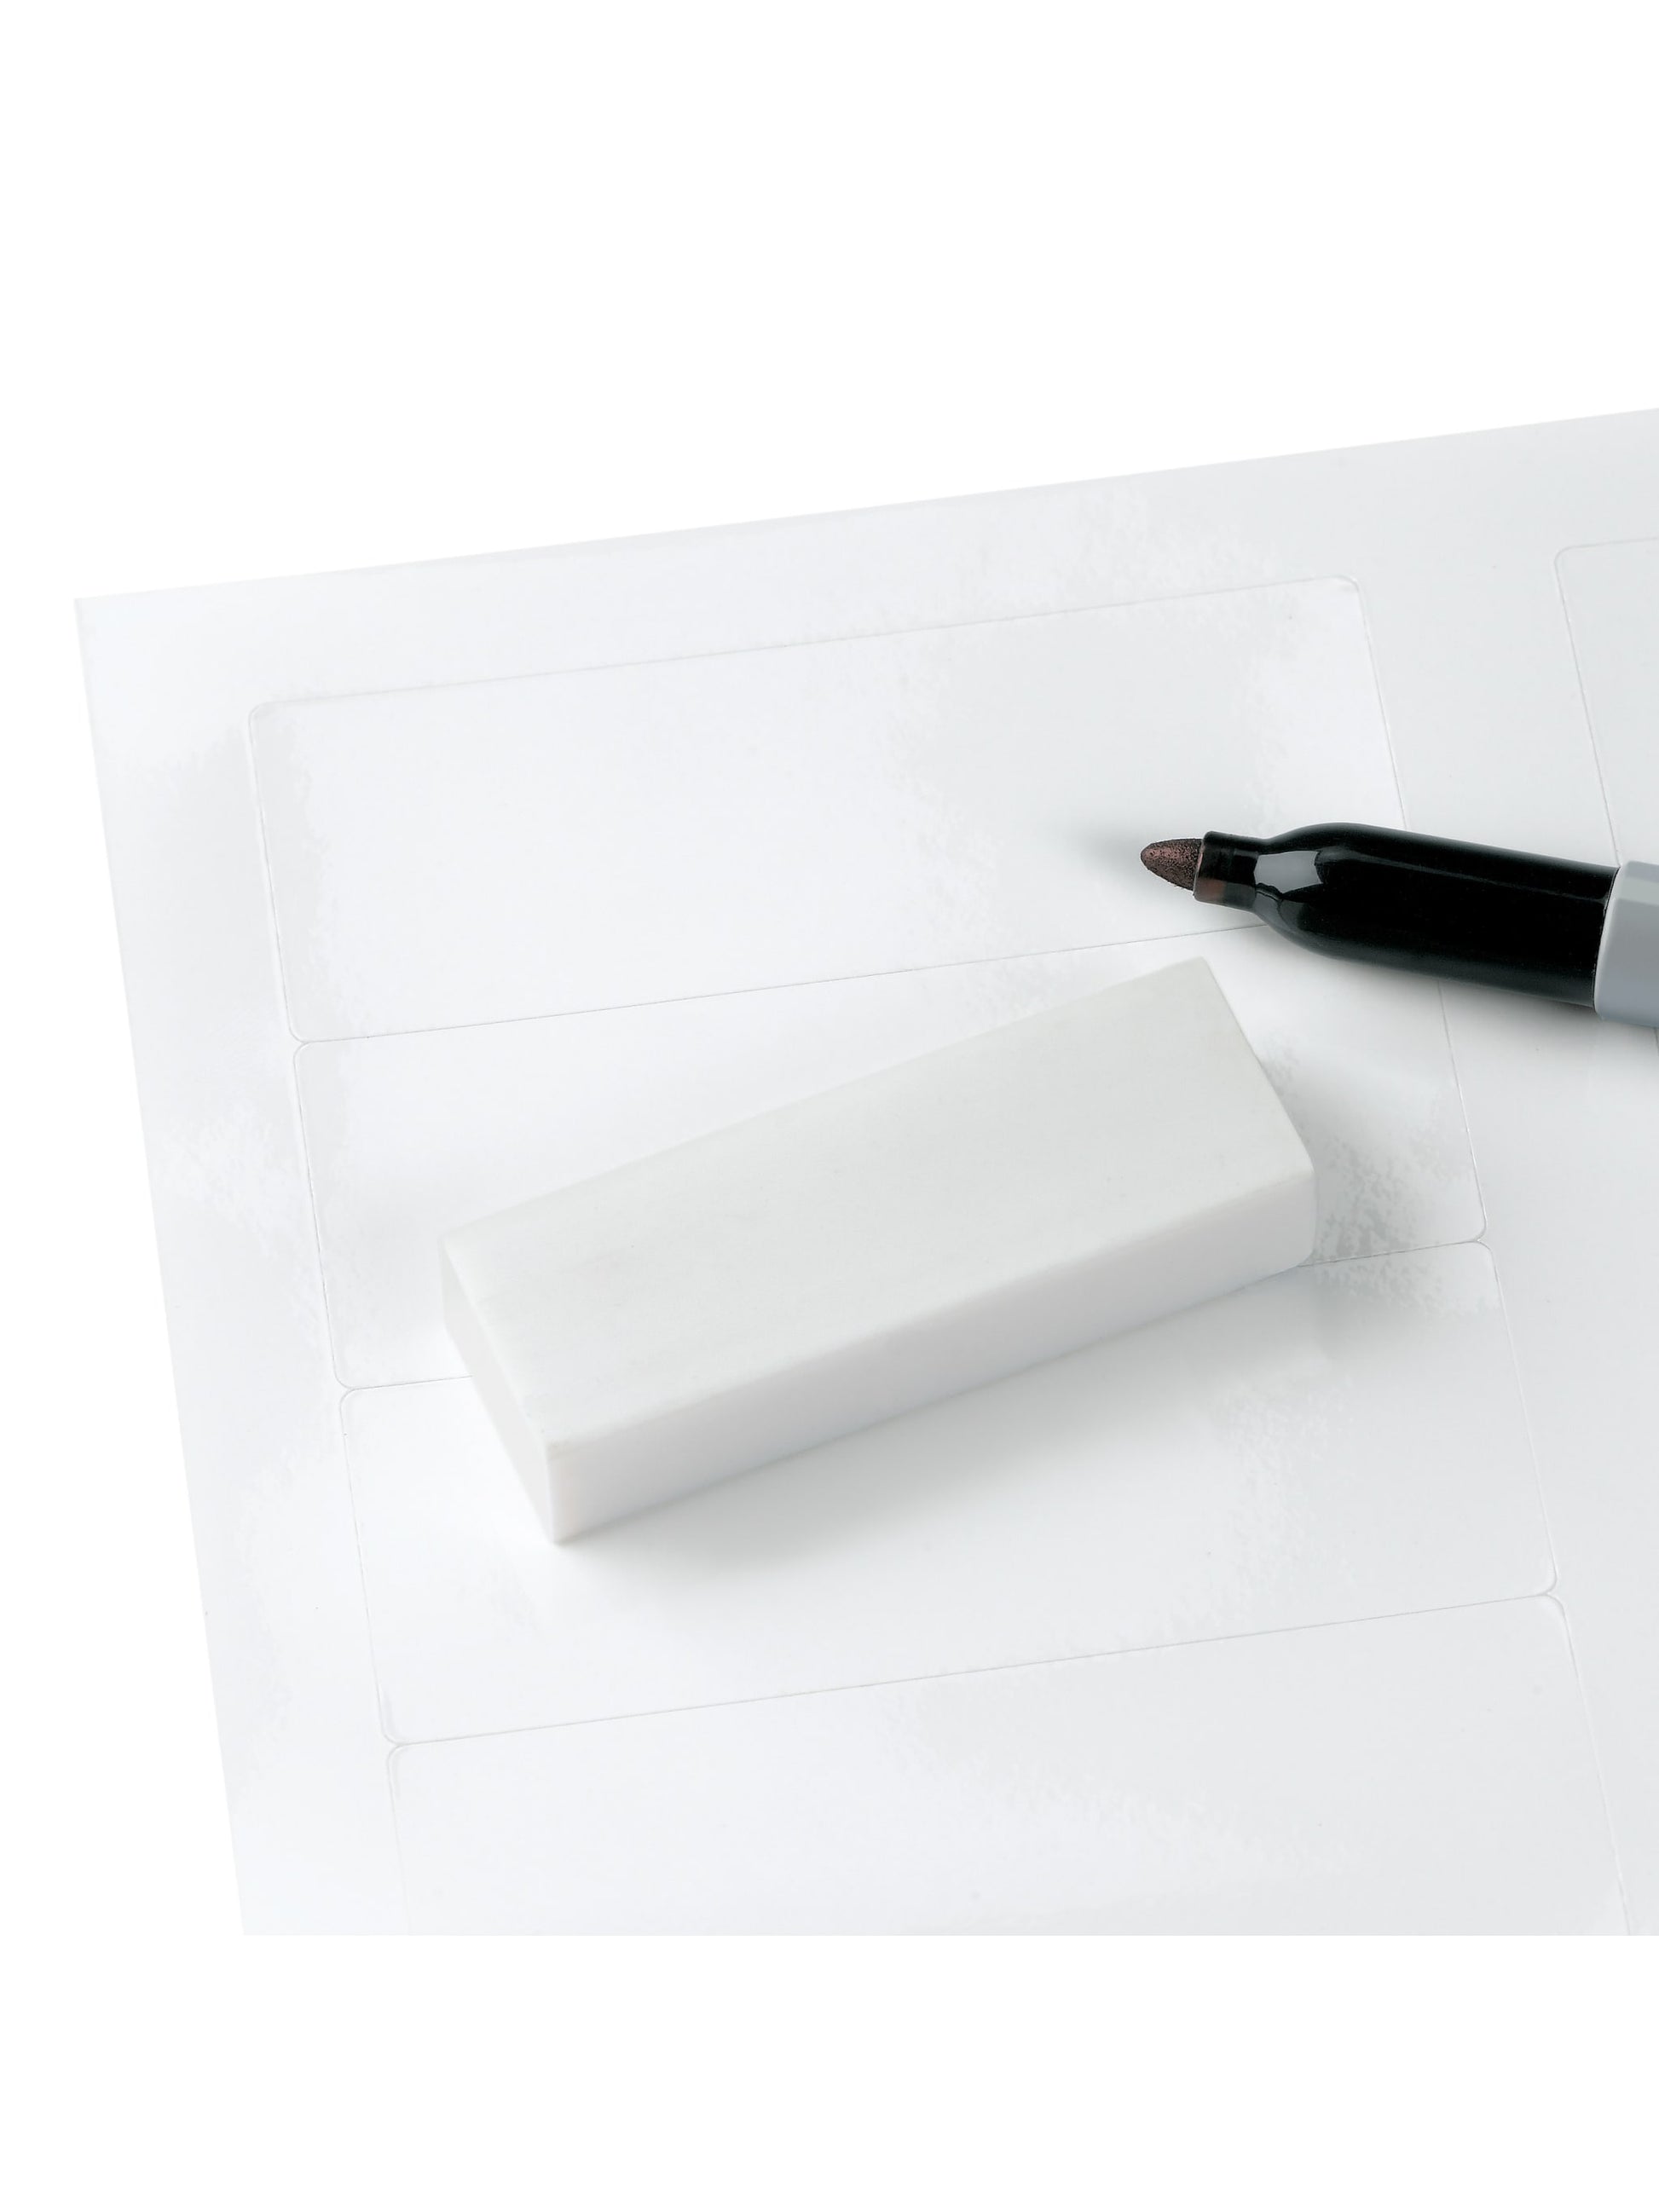 Erasable SuperTab® File Folder Labels, White Color, 3-7/16 X 1-1/4"" Size, Set of 1, 086486649179